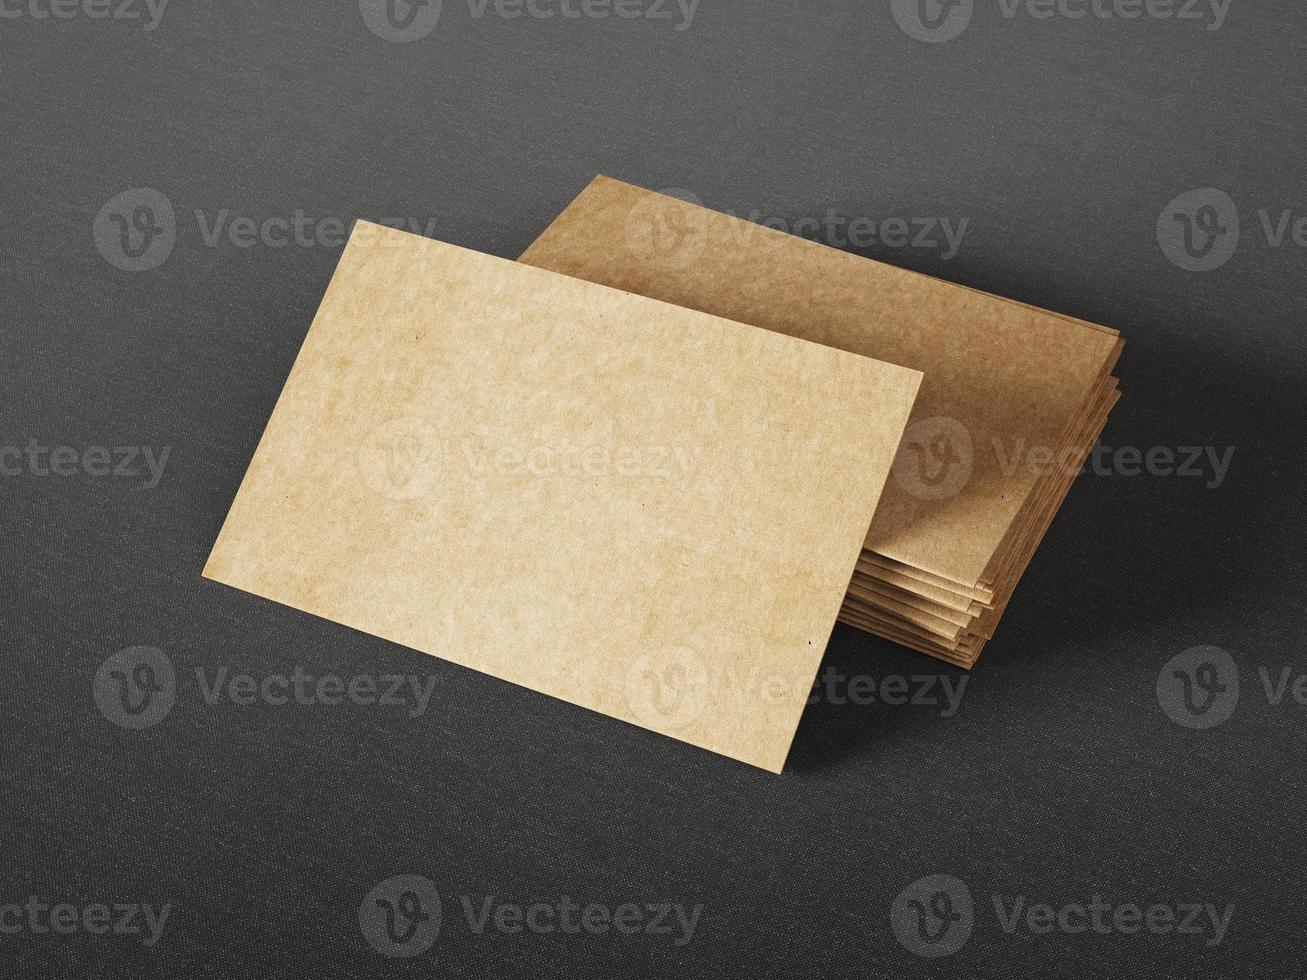 Cardboard business cards on dark background photo